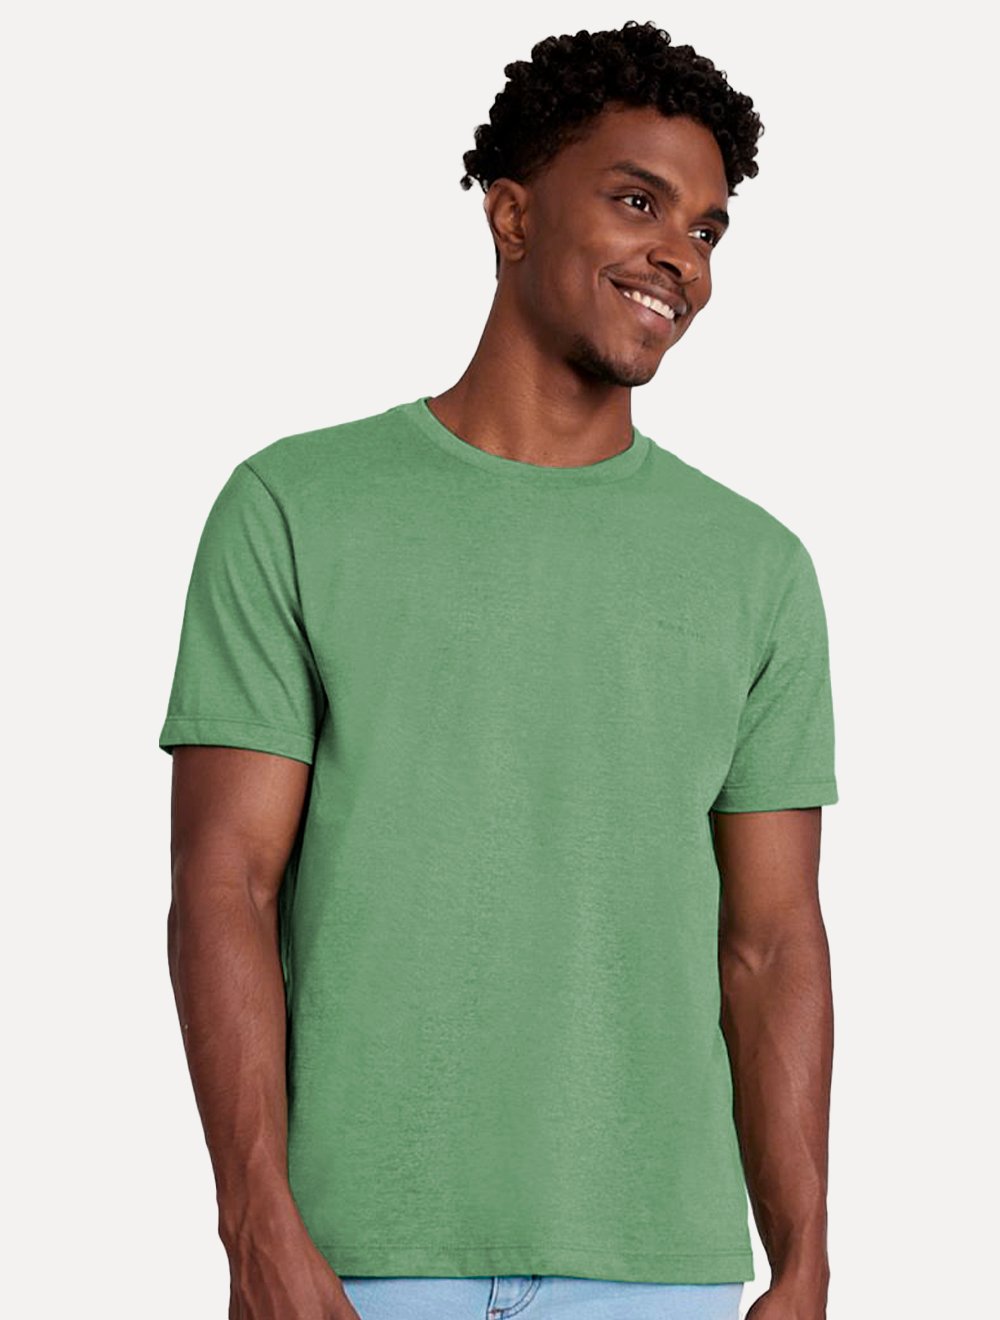 Camiseta Aramis Masculina Eco Lisa Cacto Verde Mescla